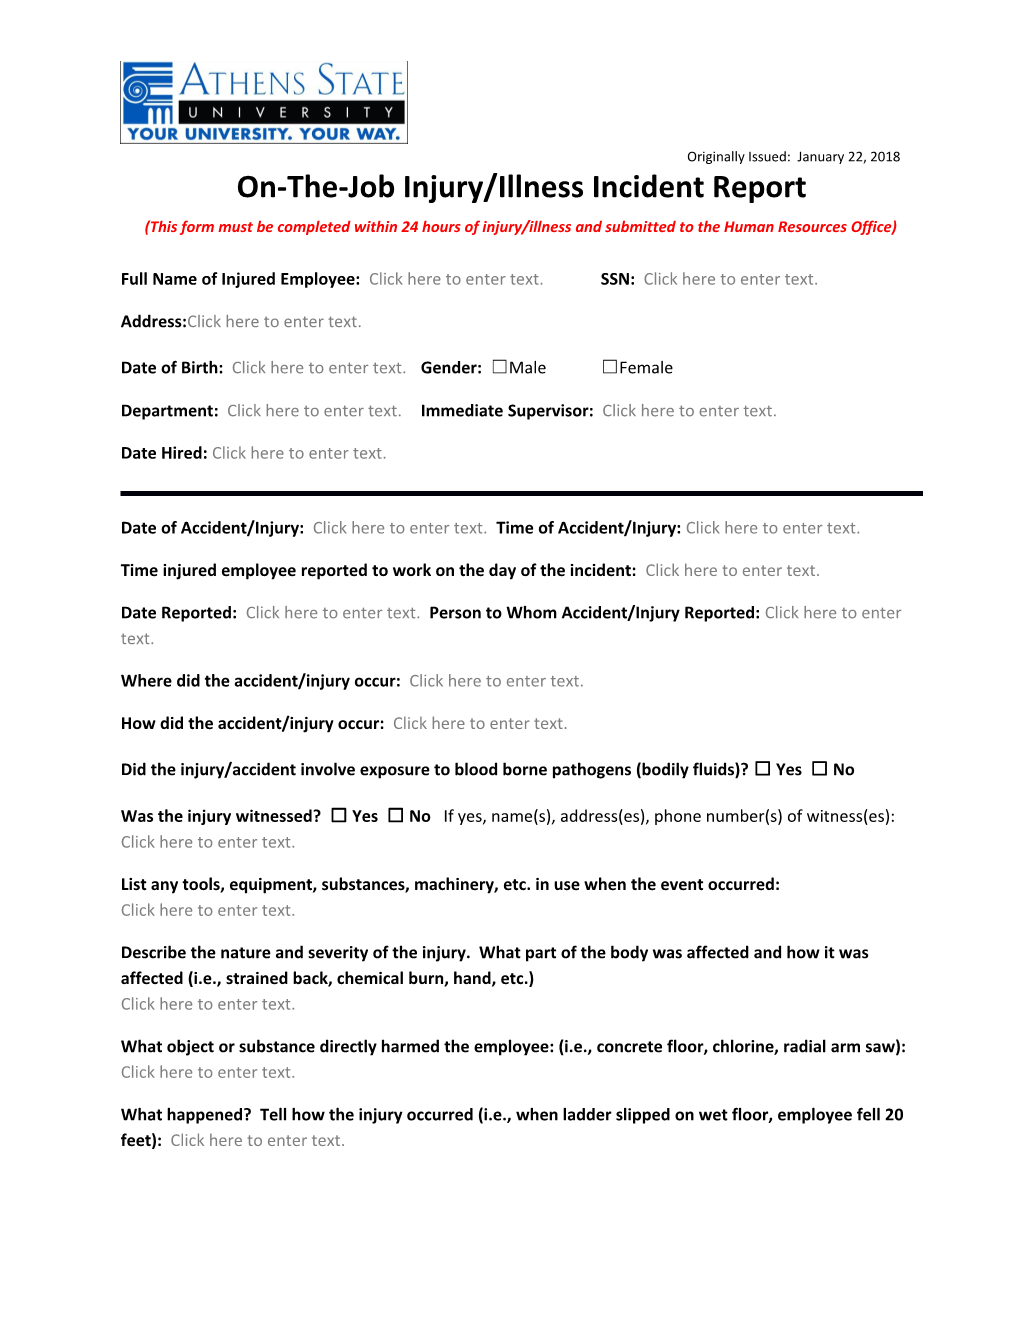 On-The-Job Injury/Illness Incident Report